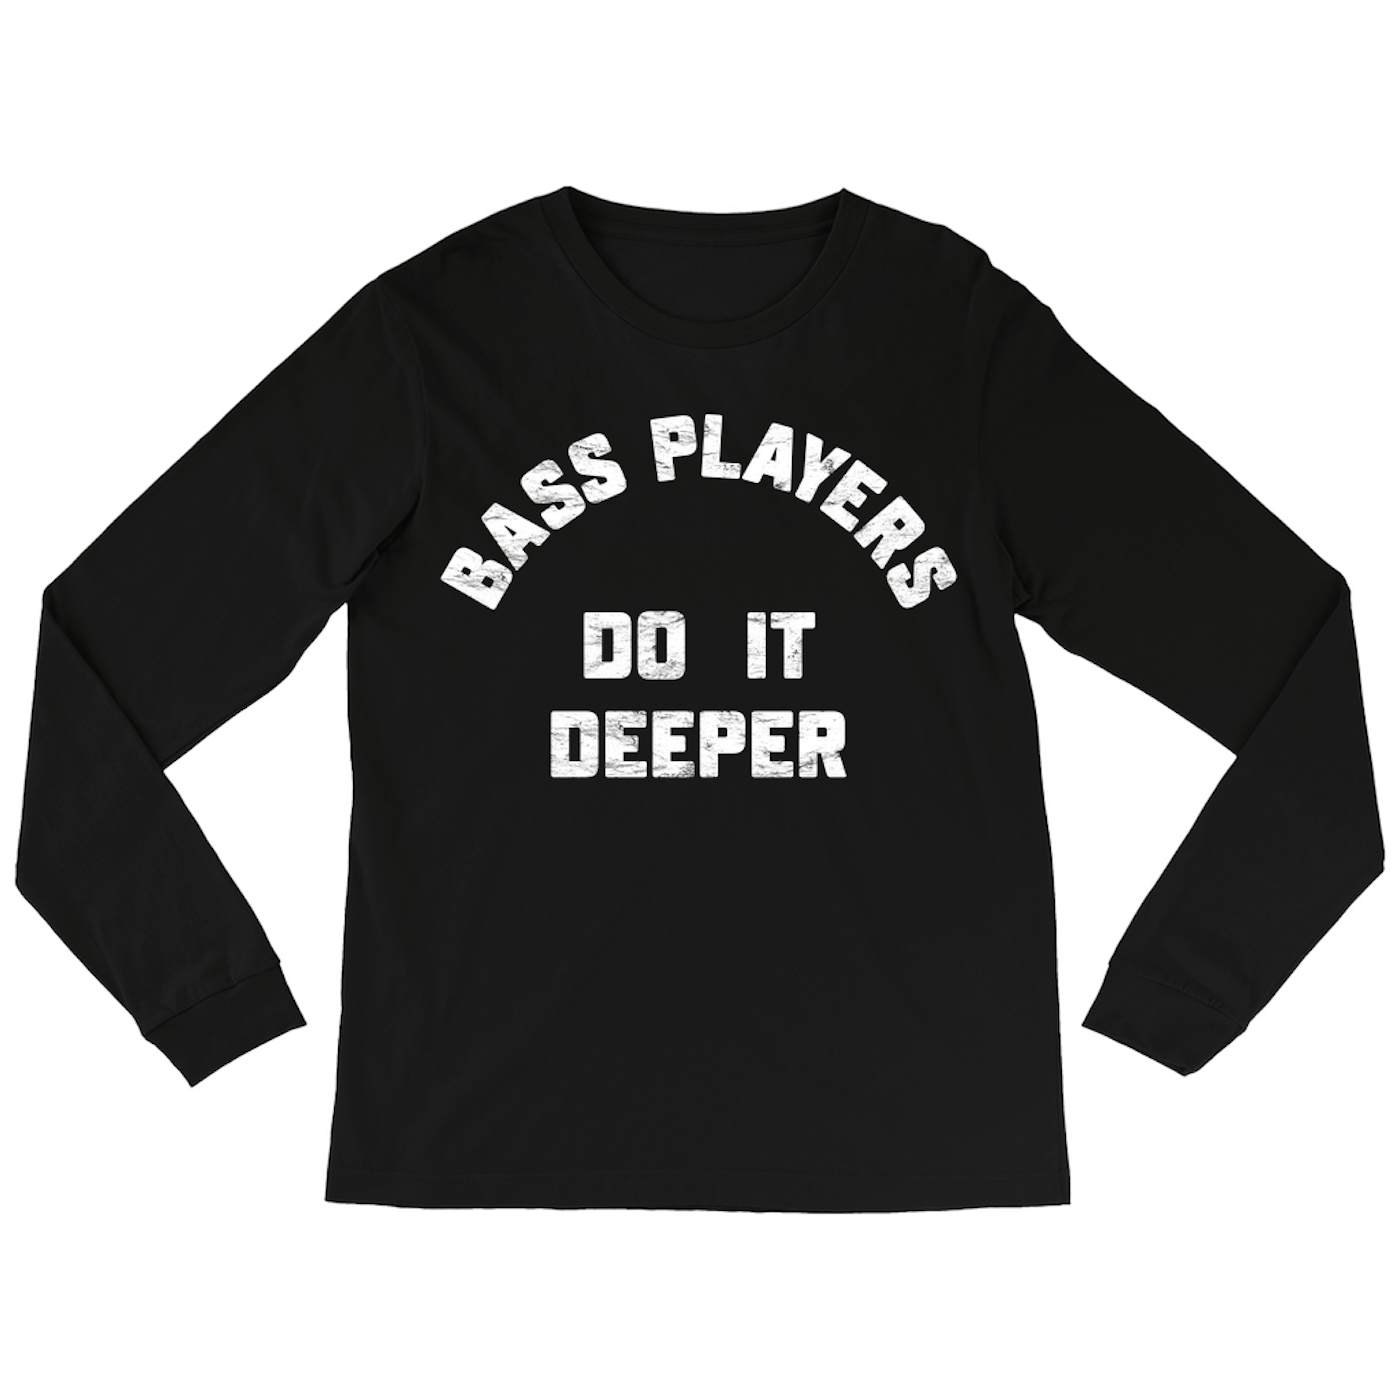 Def Leppard Long Sleeve Shirt | Bass Players Do It Worn By Rick Savage Def Leppard Shirt